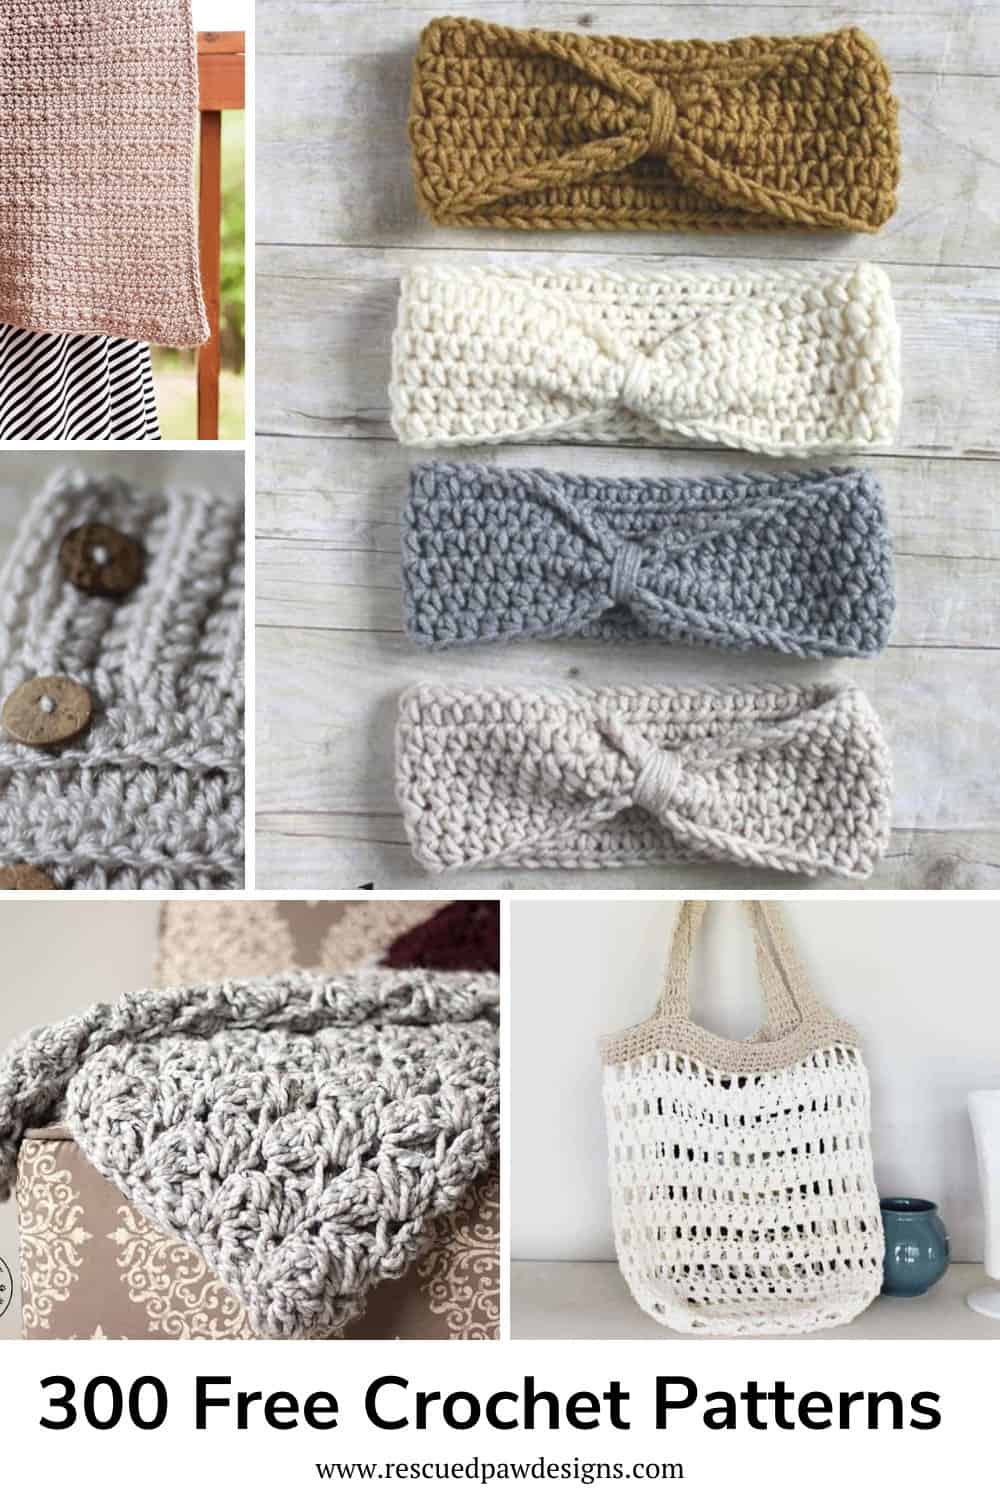 300 Free Crochet Patterns via @easycrochetcom